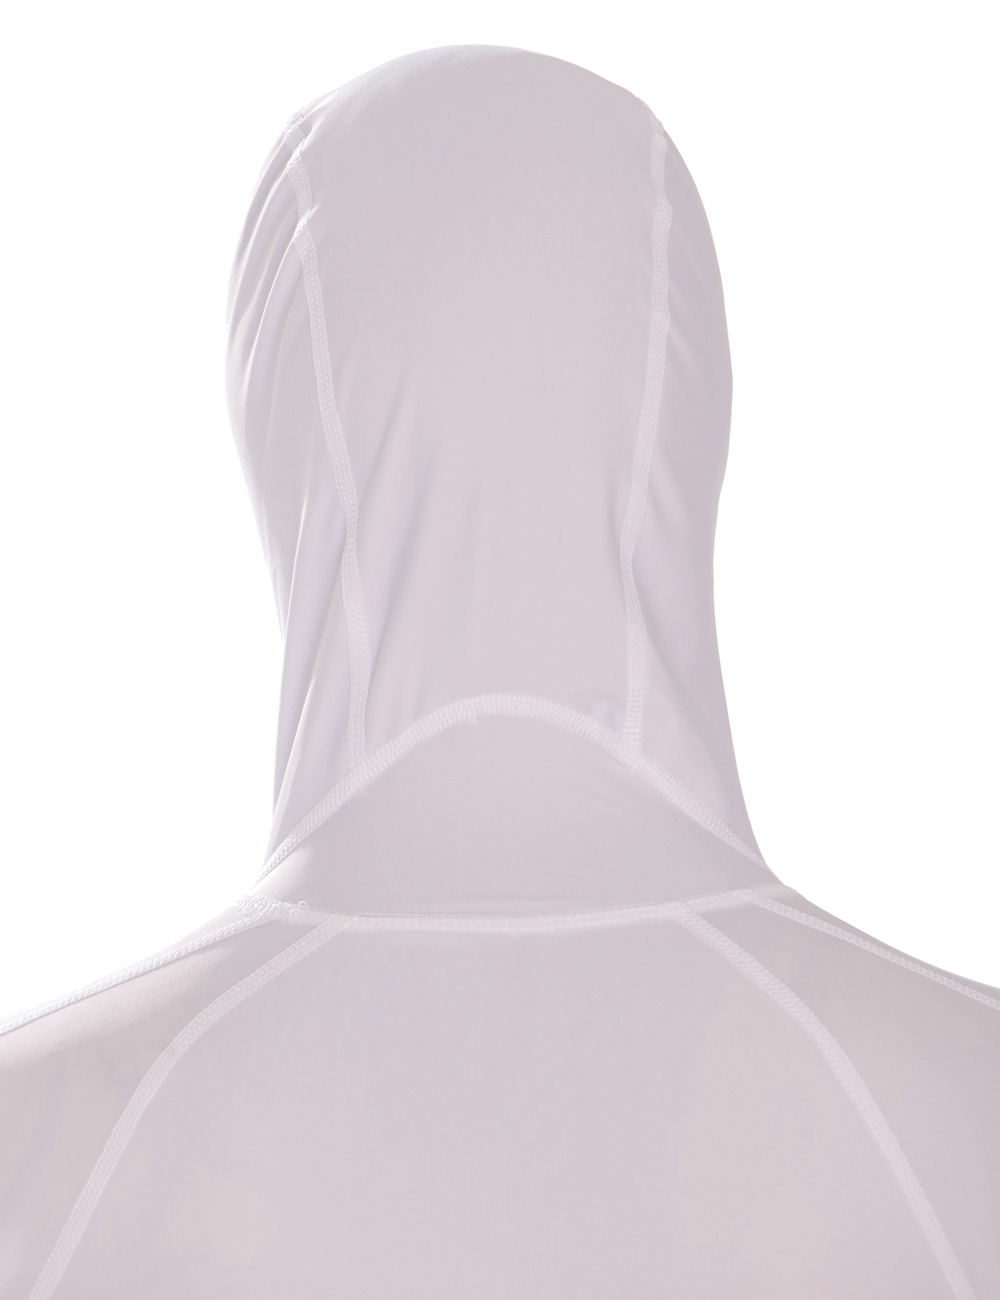 UV rashguard mit Kapuze Damen weiß kapuze bake